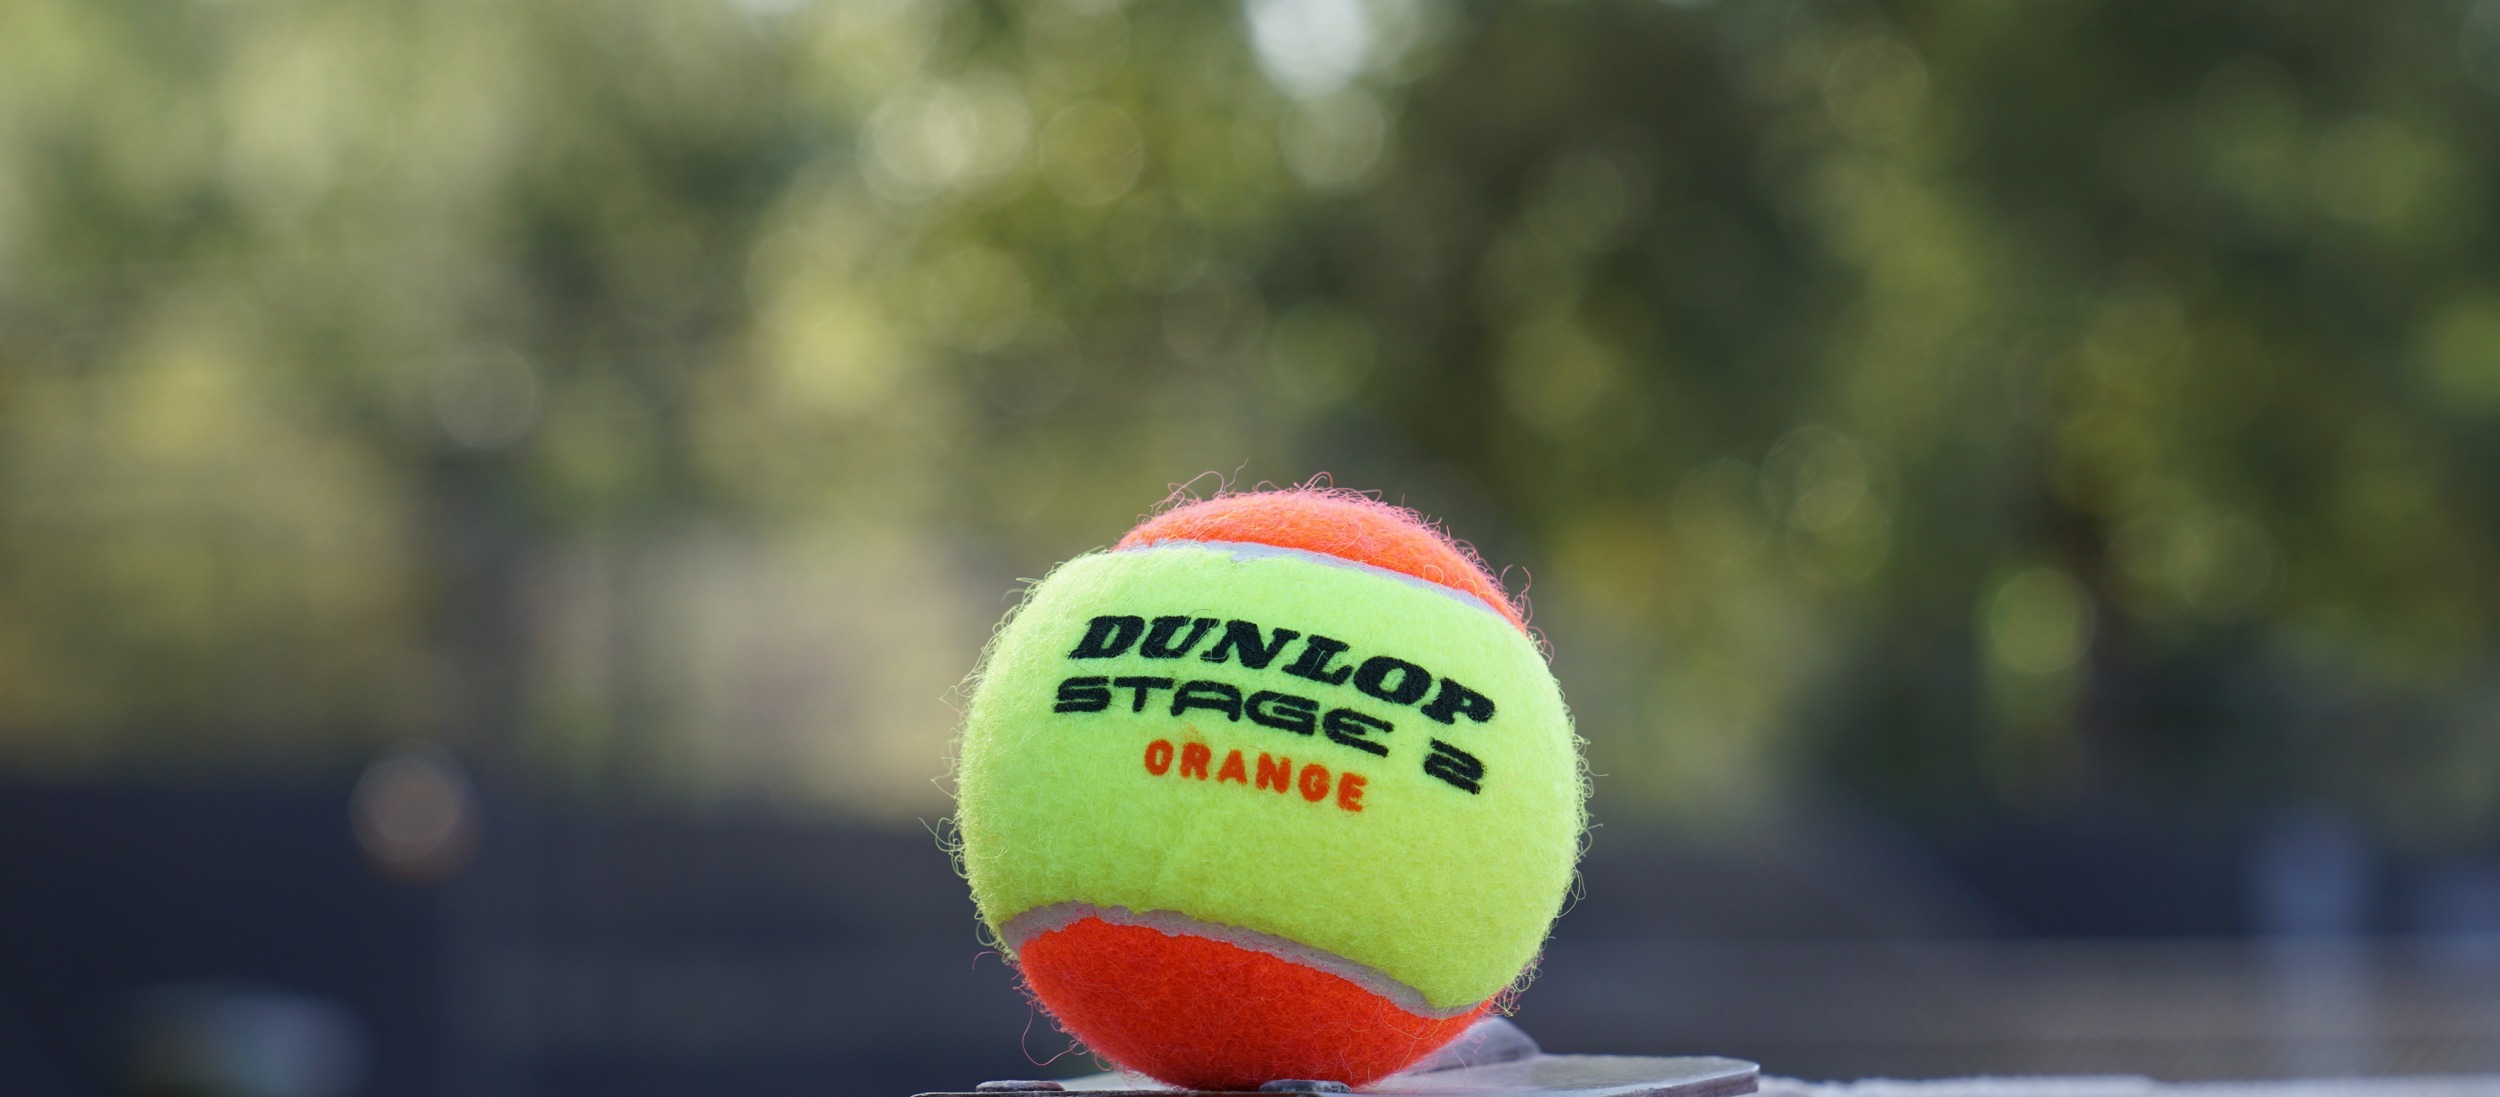 Oranje Dunlop tennisbal (2)